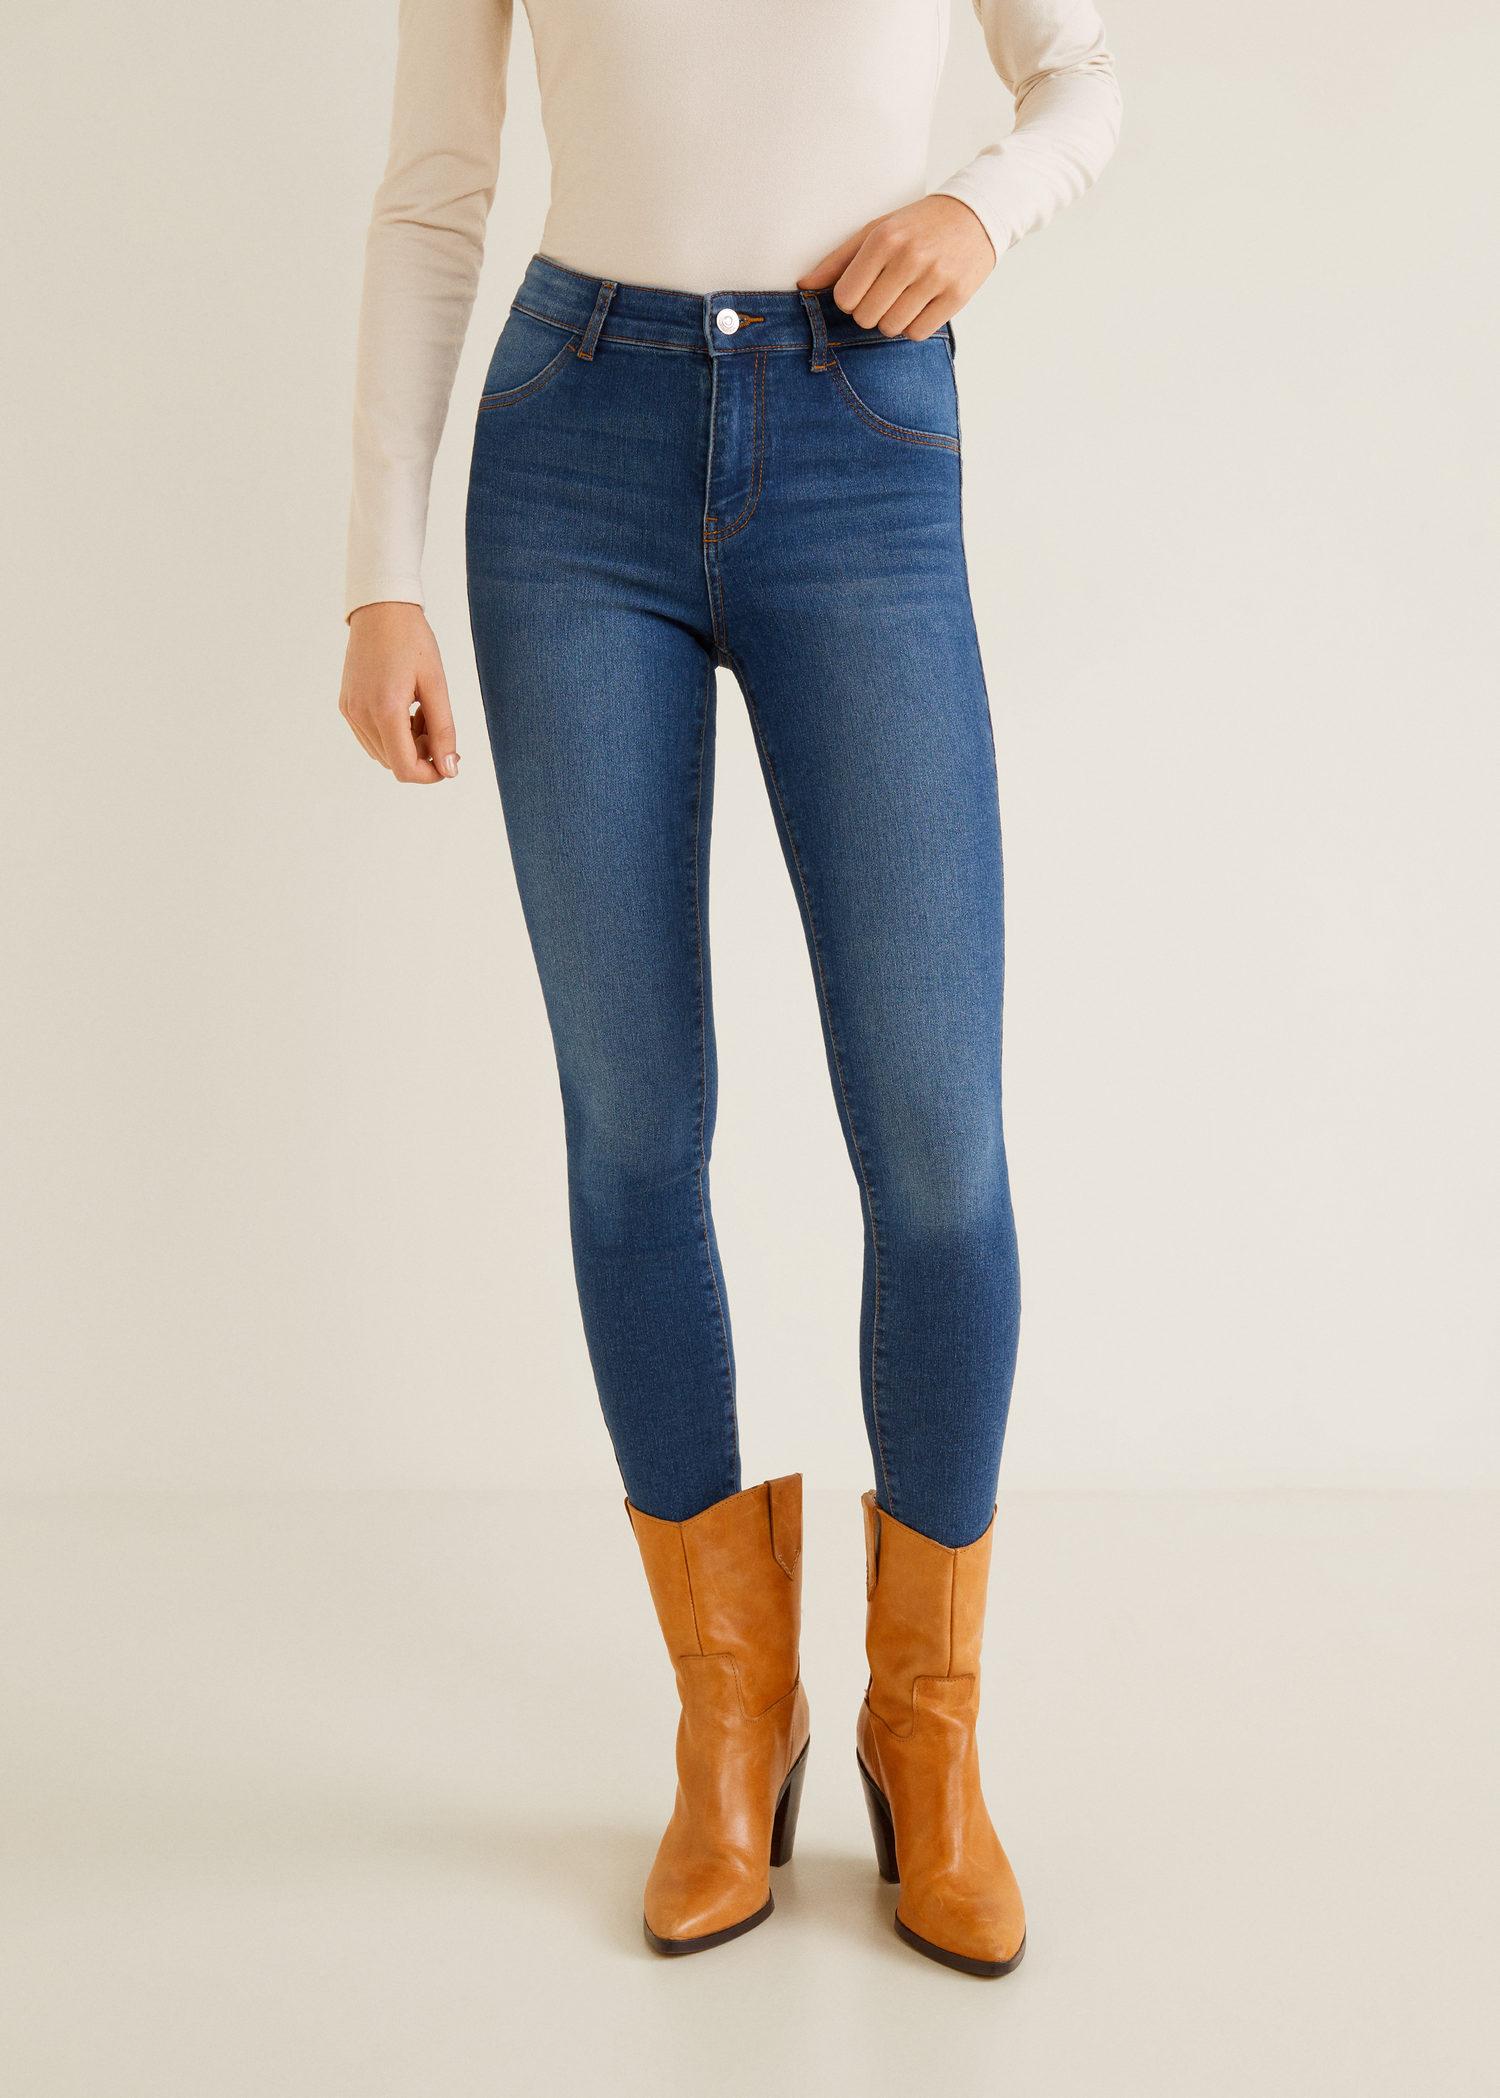 Jane skinny jeans - light blue MANGO Jeans | Superbalist.com